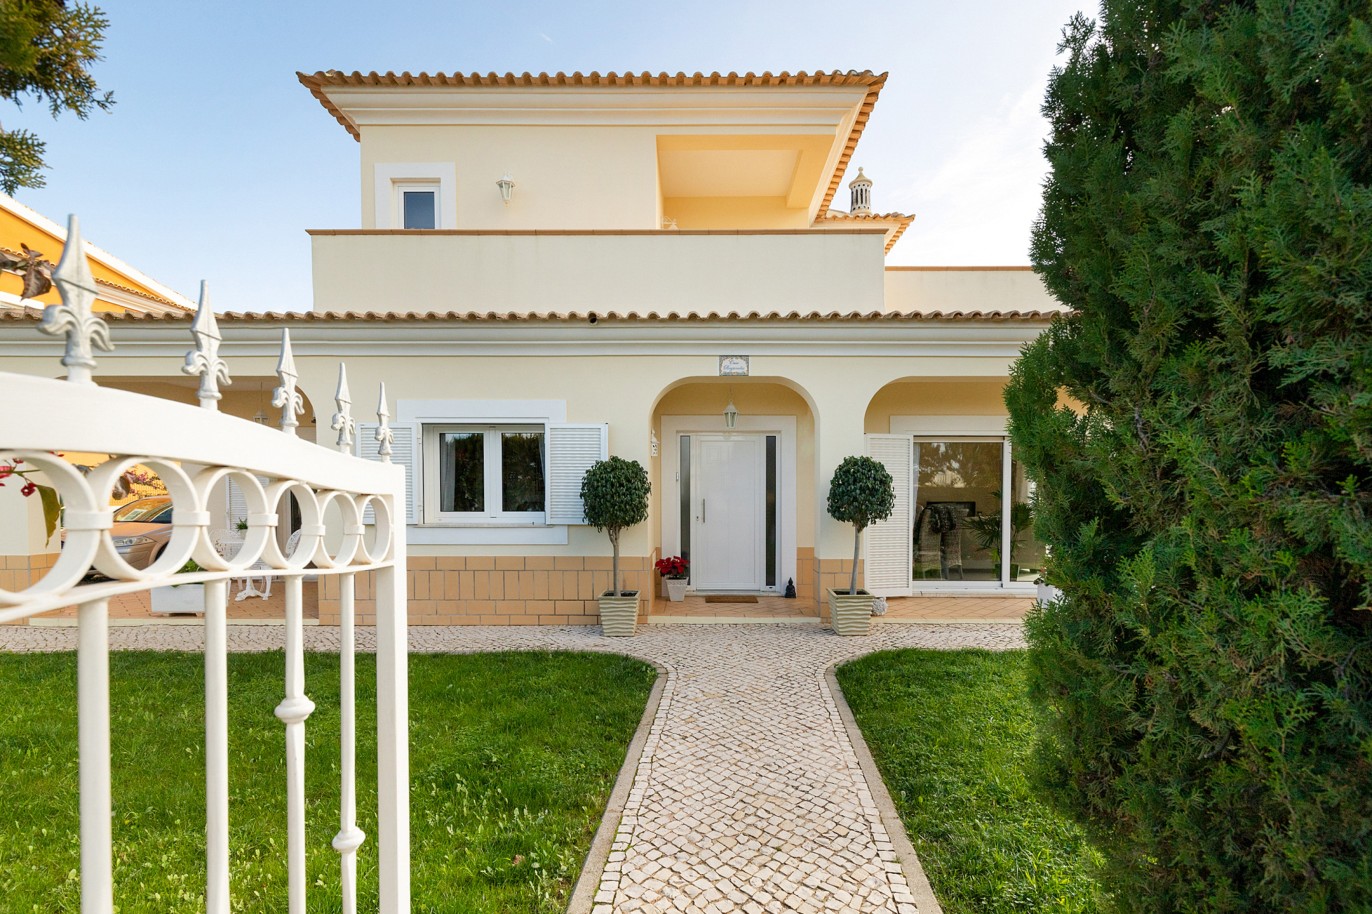 Fantastic 3 bedroom villa with pool, for sale in Algoz, Algarve_215655